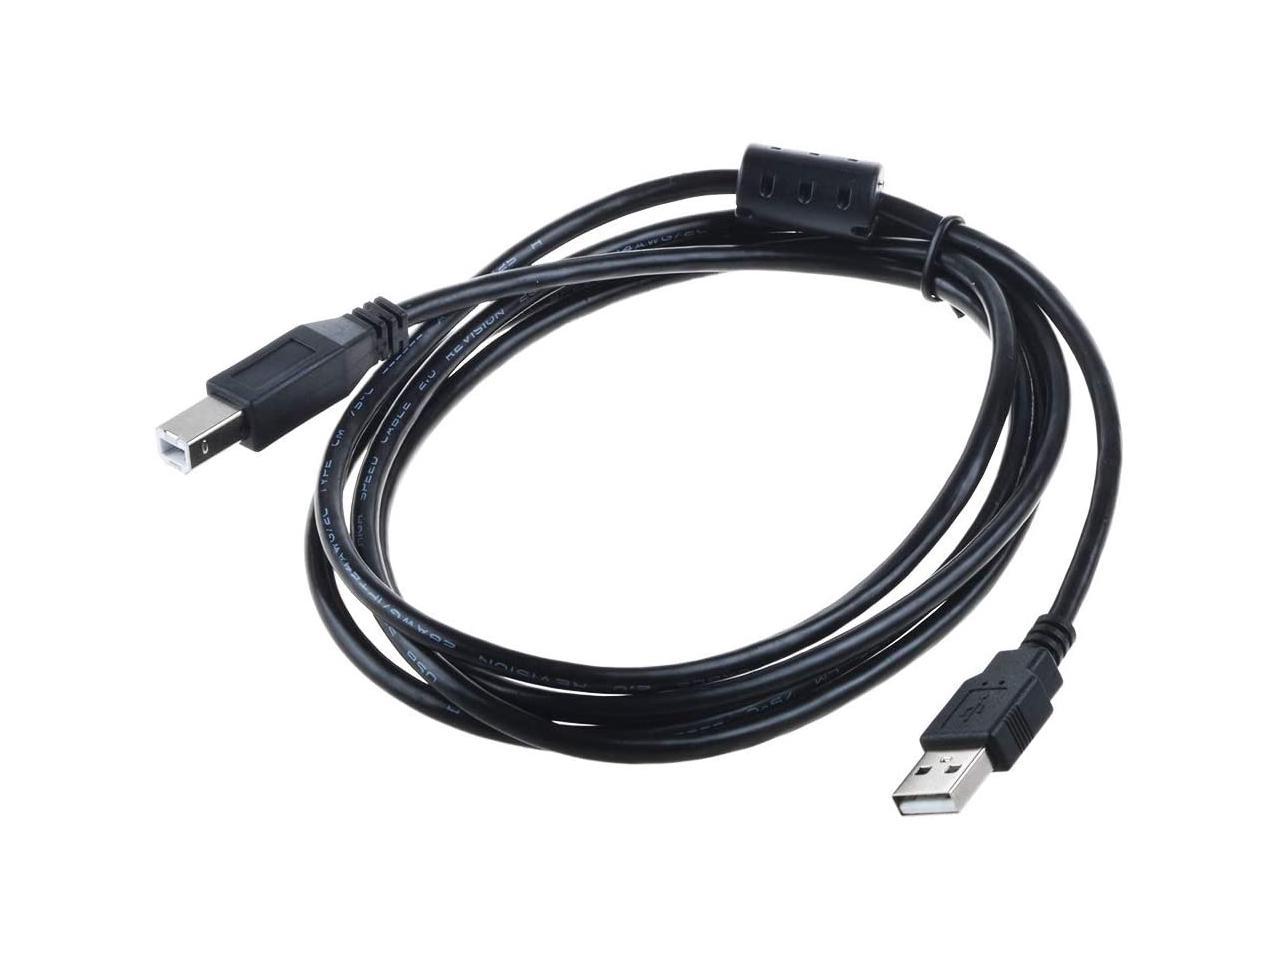 JVC GR-DX37E,GR-DX37EK CAMERA REPLACEMENT USB DATA SYNC CABLE/LEAD 